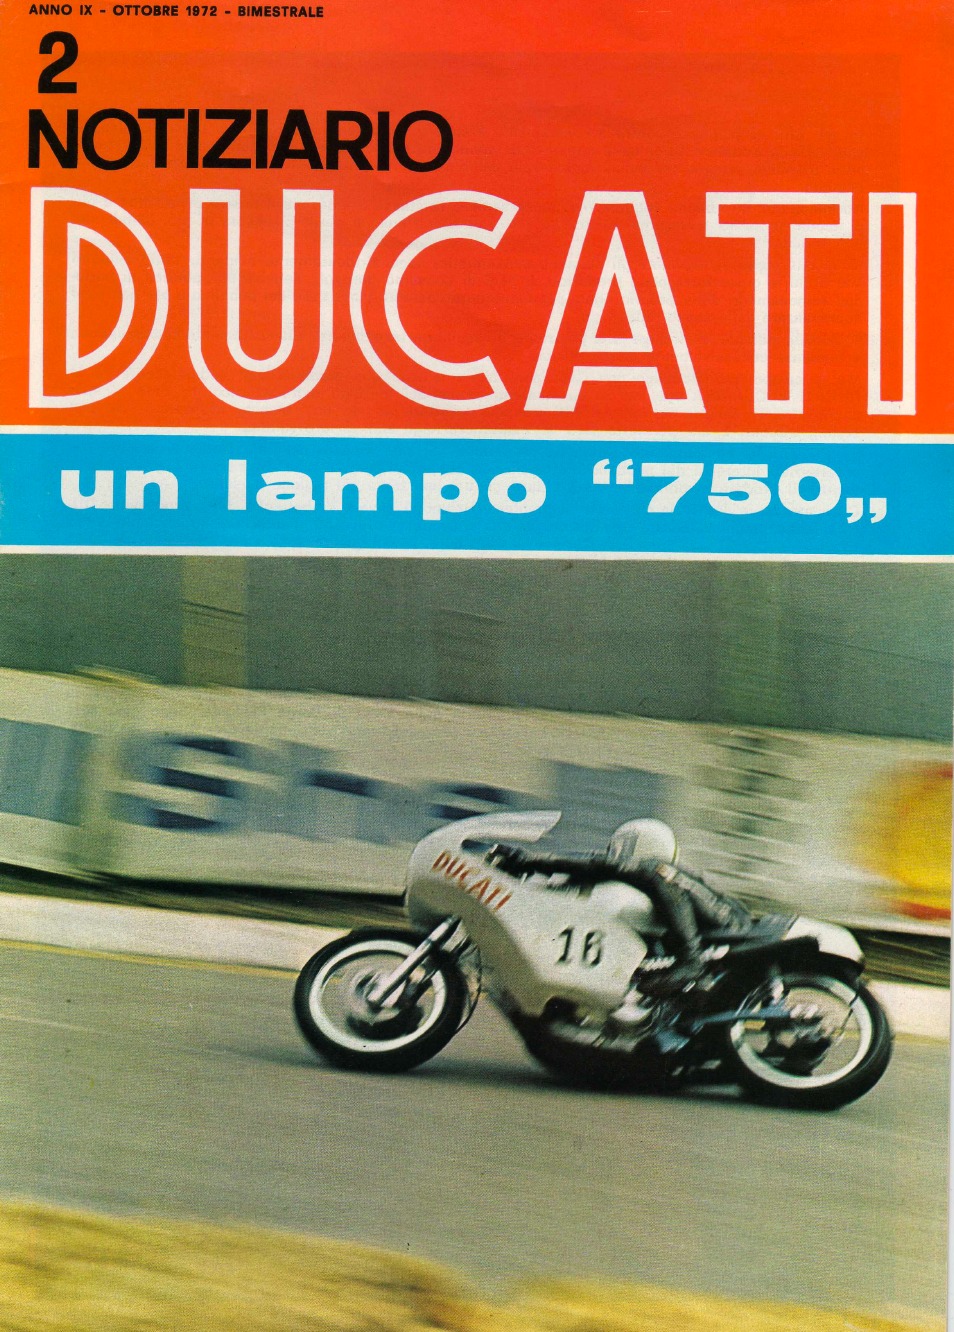 Ducati Imola